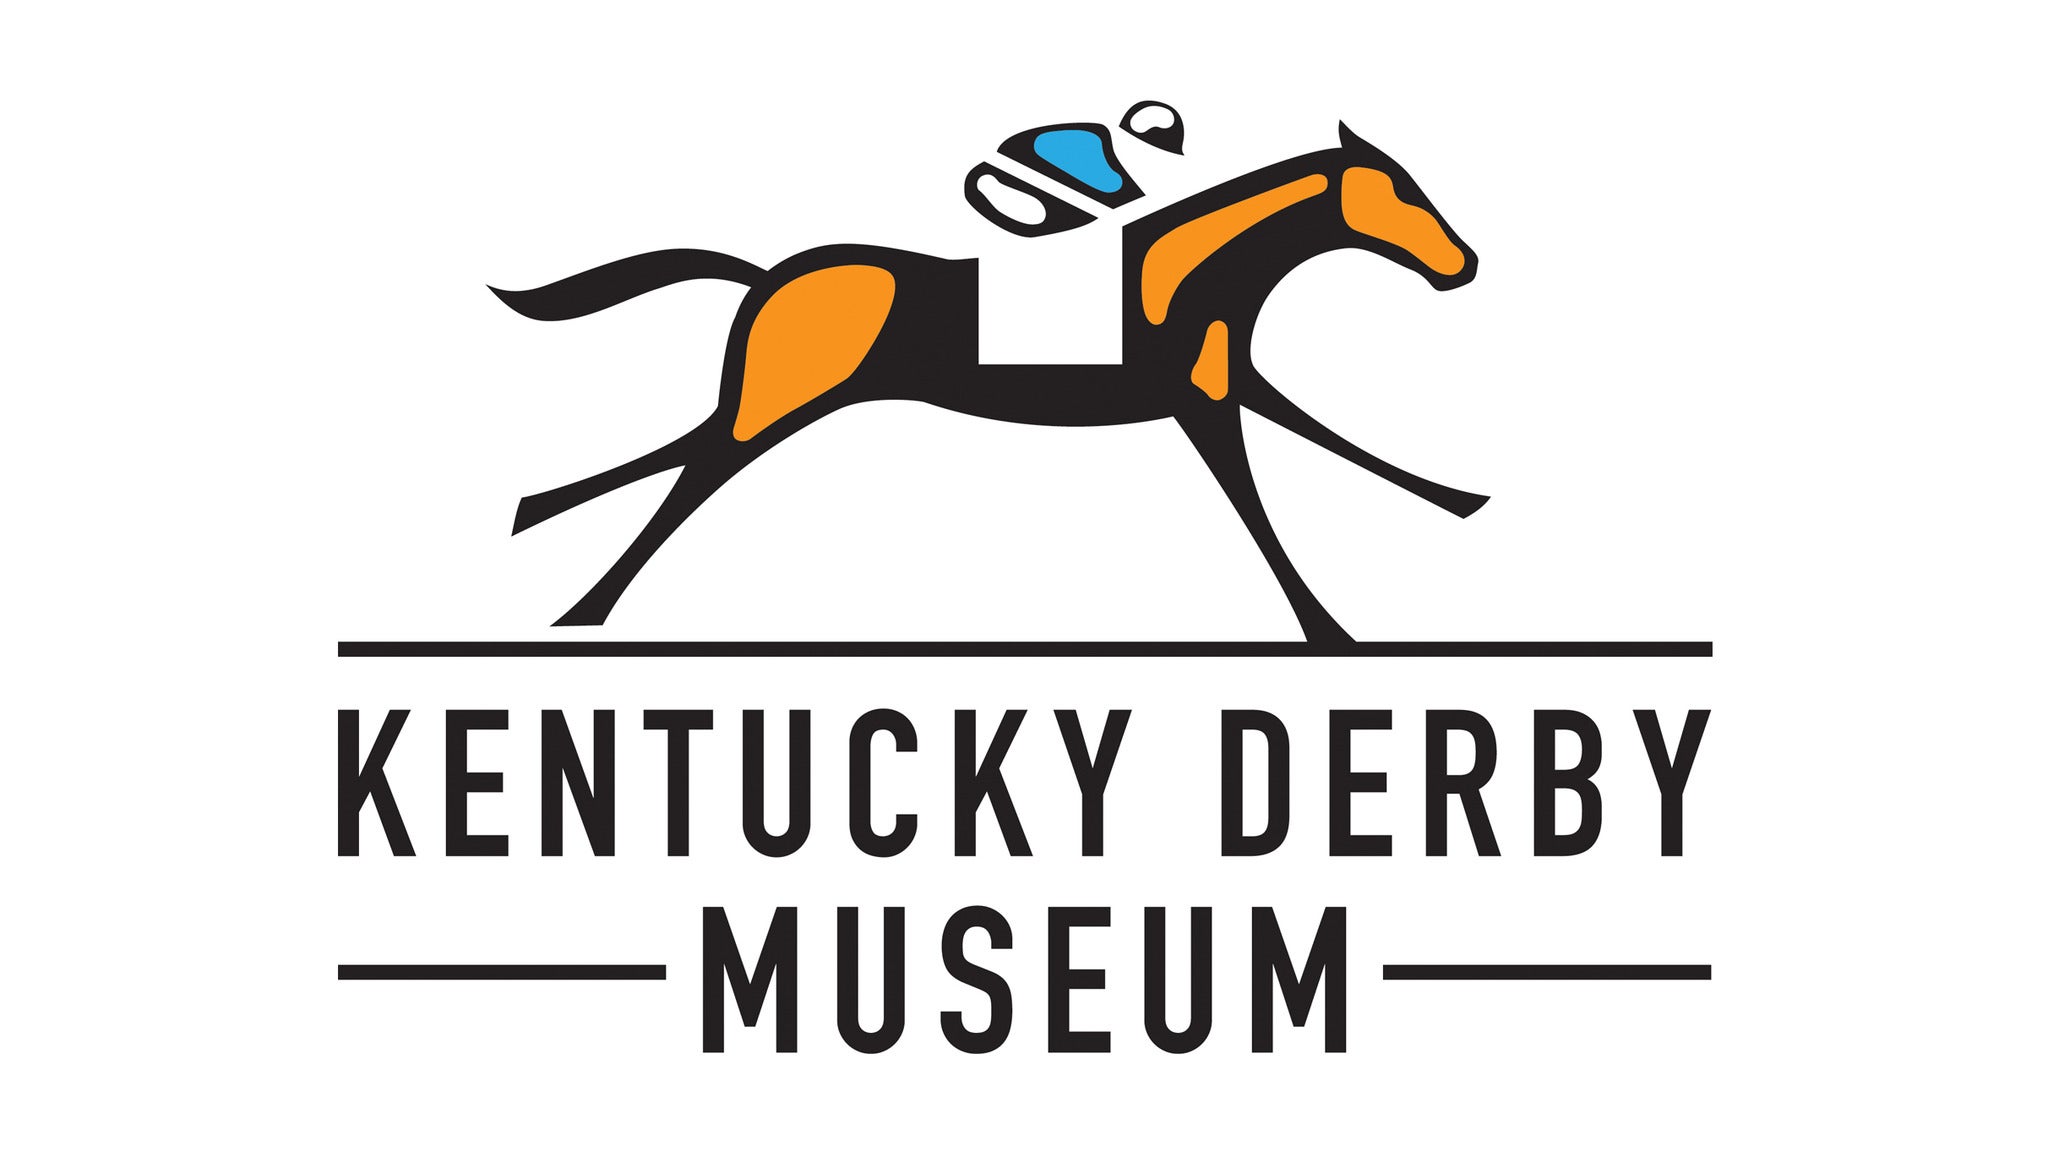 Kentucky Derby Museum Events Tickets Event Dates & Schedule